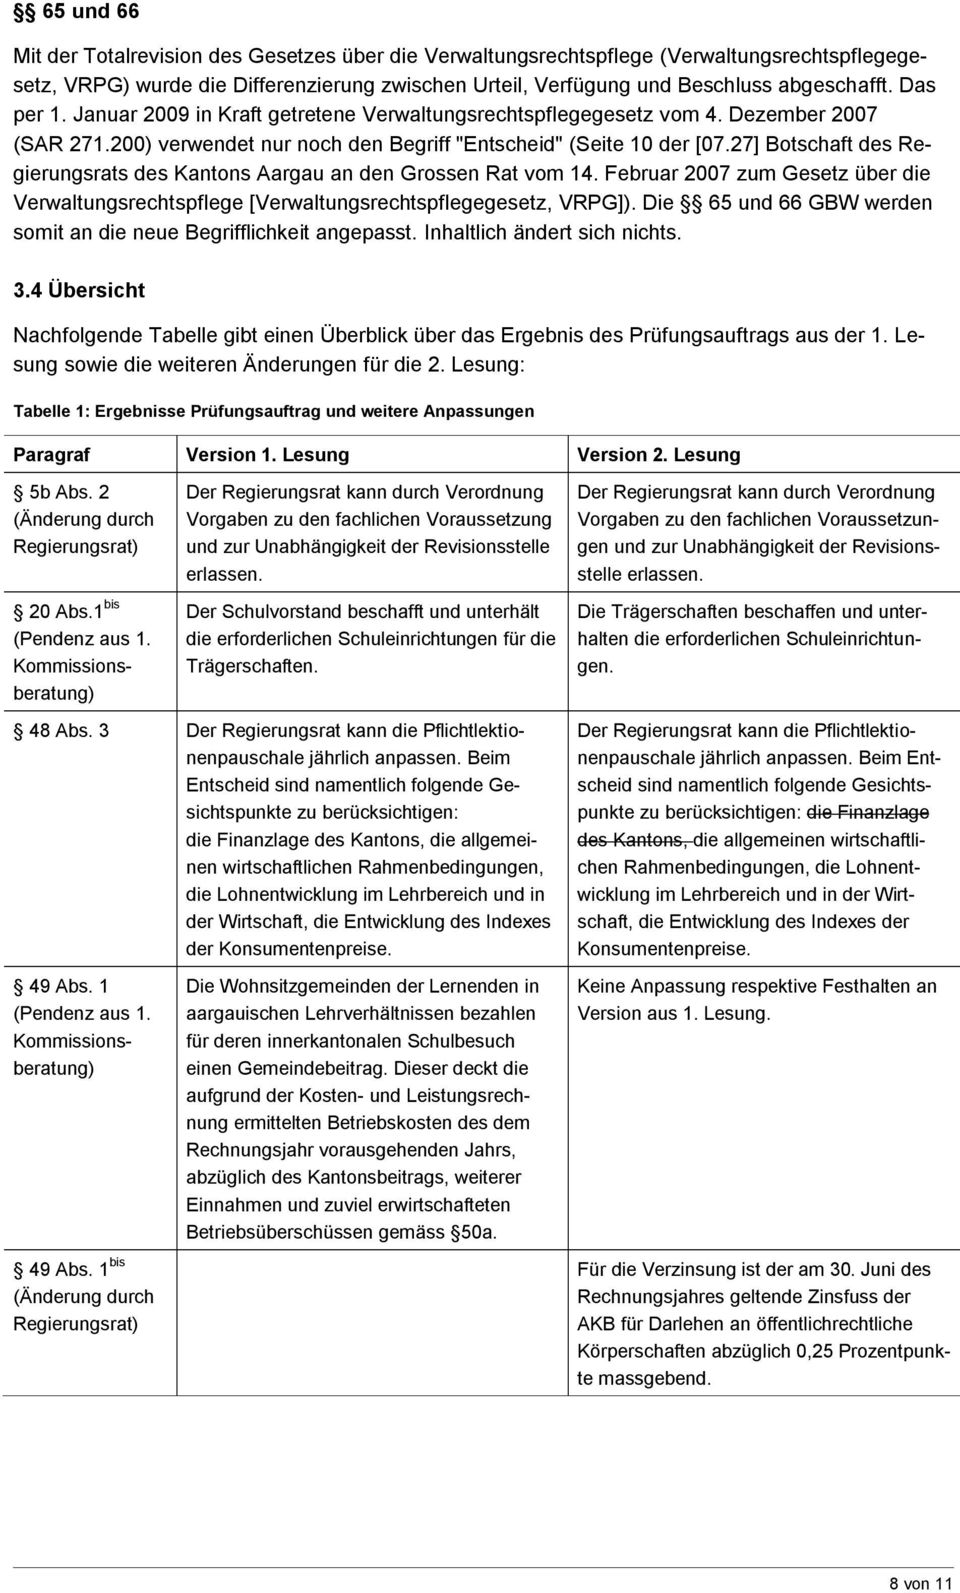 27] Botschaft des Regierungsrats des Kantons Aargau an den Grossen Rat vom 14. Februar 2007 zum Gesetz über die Verwaltungsrechtspflege [Verwaltungsrechtspflegegesetz, VRPG]).